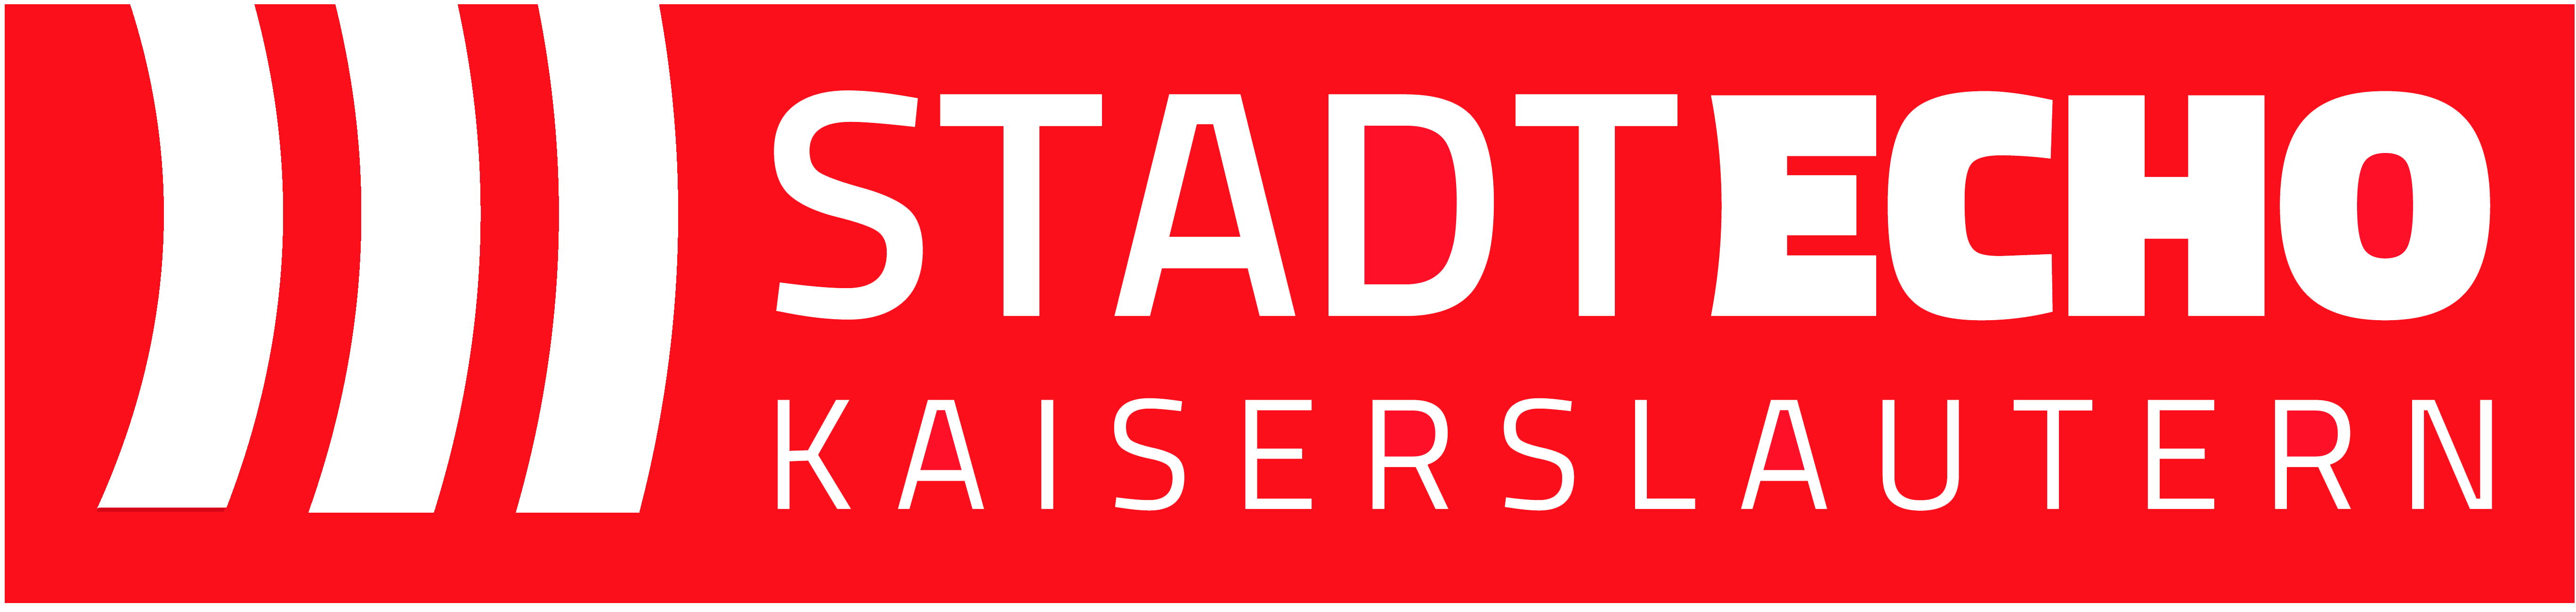 1806 Wortbildmarke Stadtecho Rot Logo